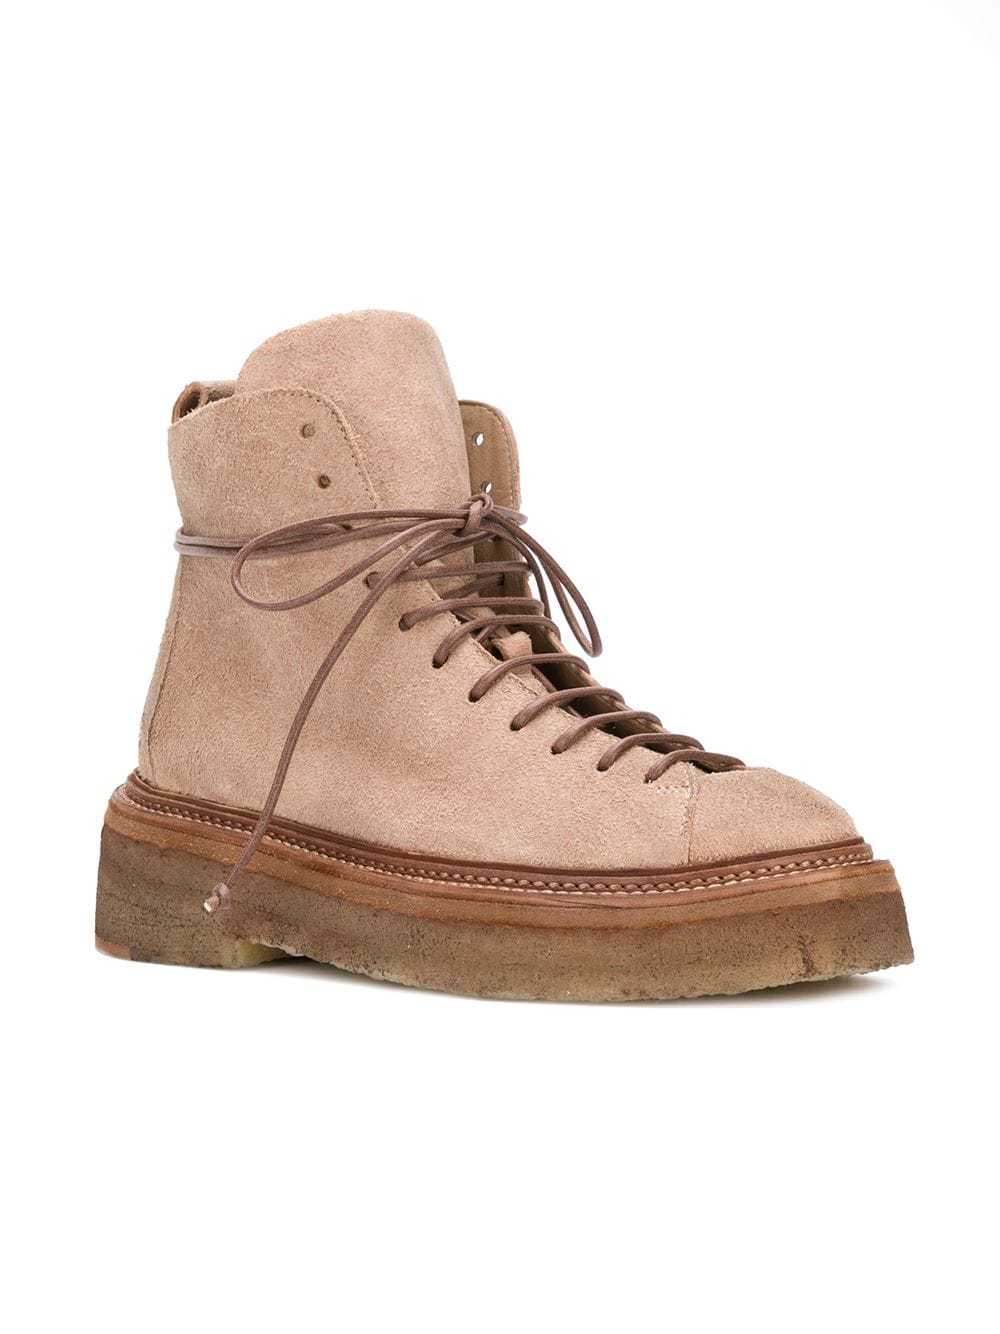 flat sole combat boots